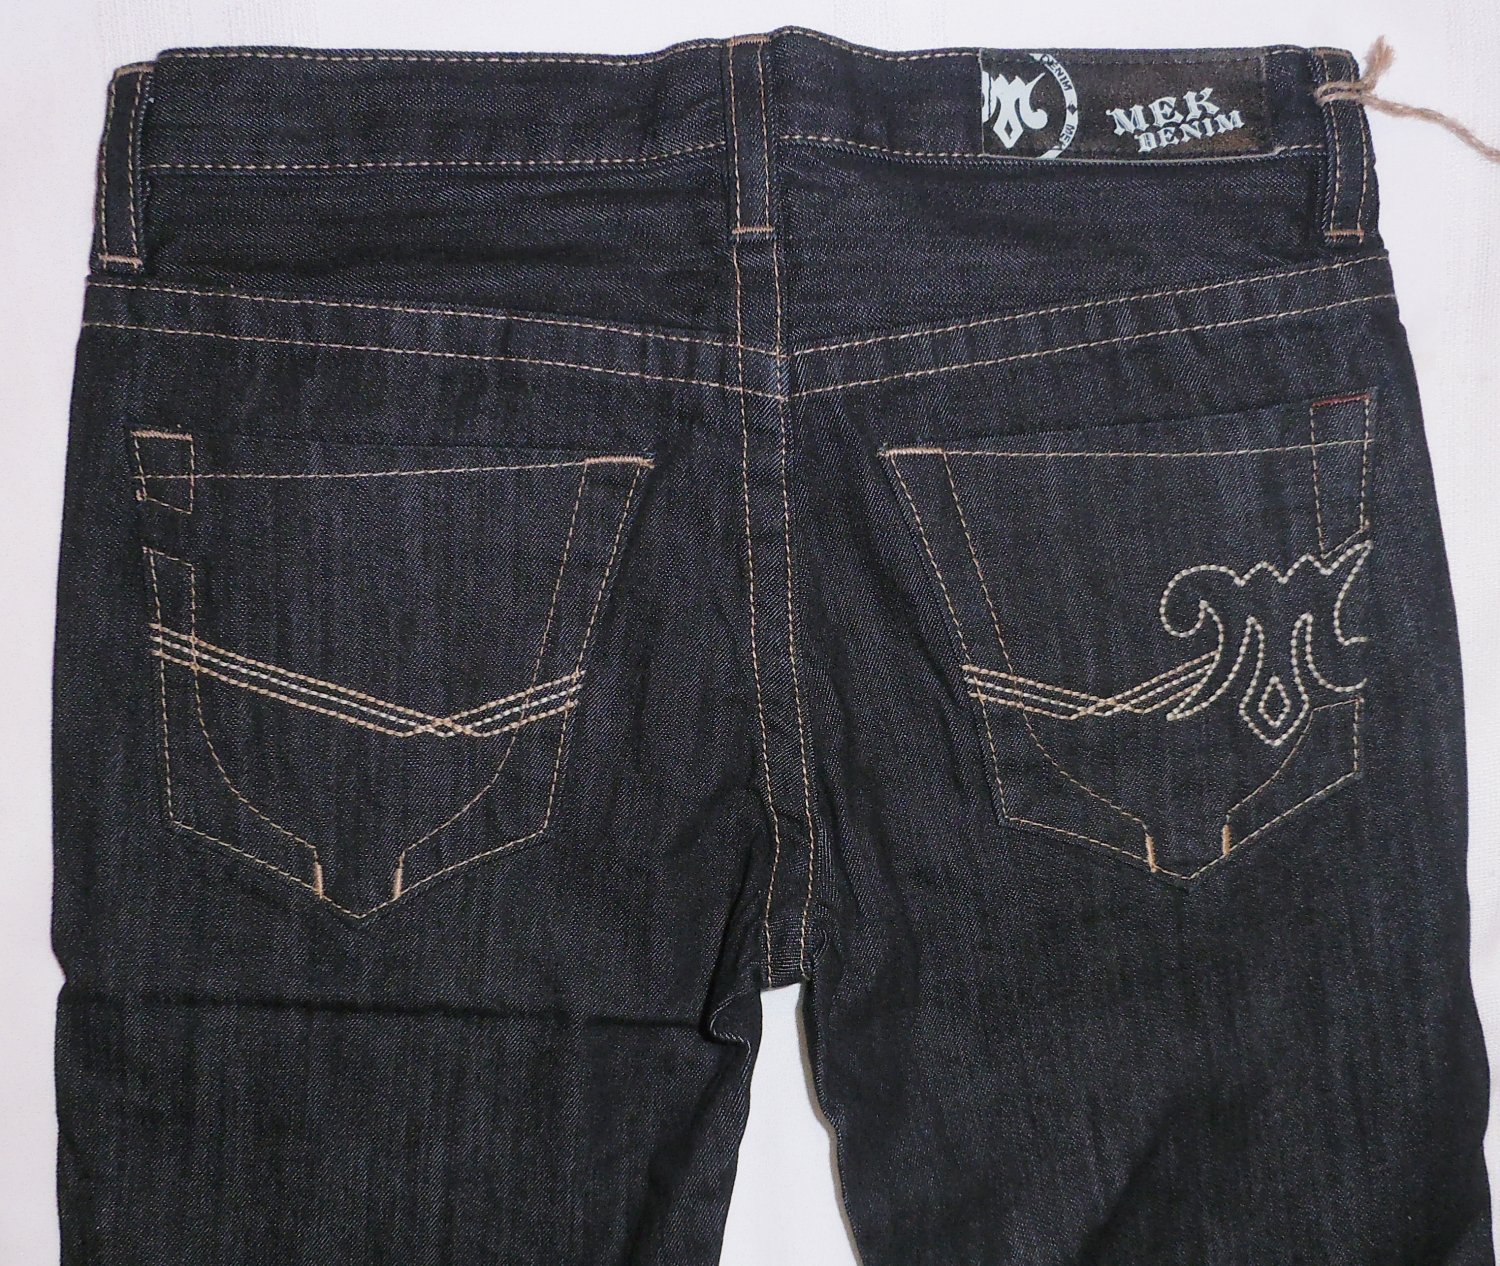 MEK DENIM mens Jeans by ROCK REVIVAL KLIEN Bootcut size 32 34 blue rinse